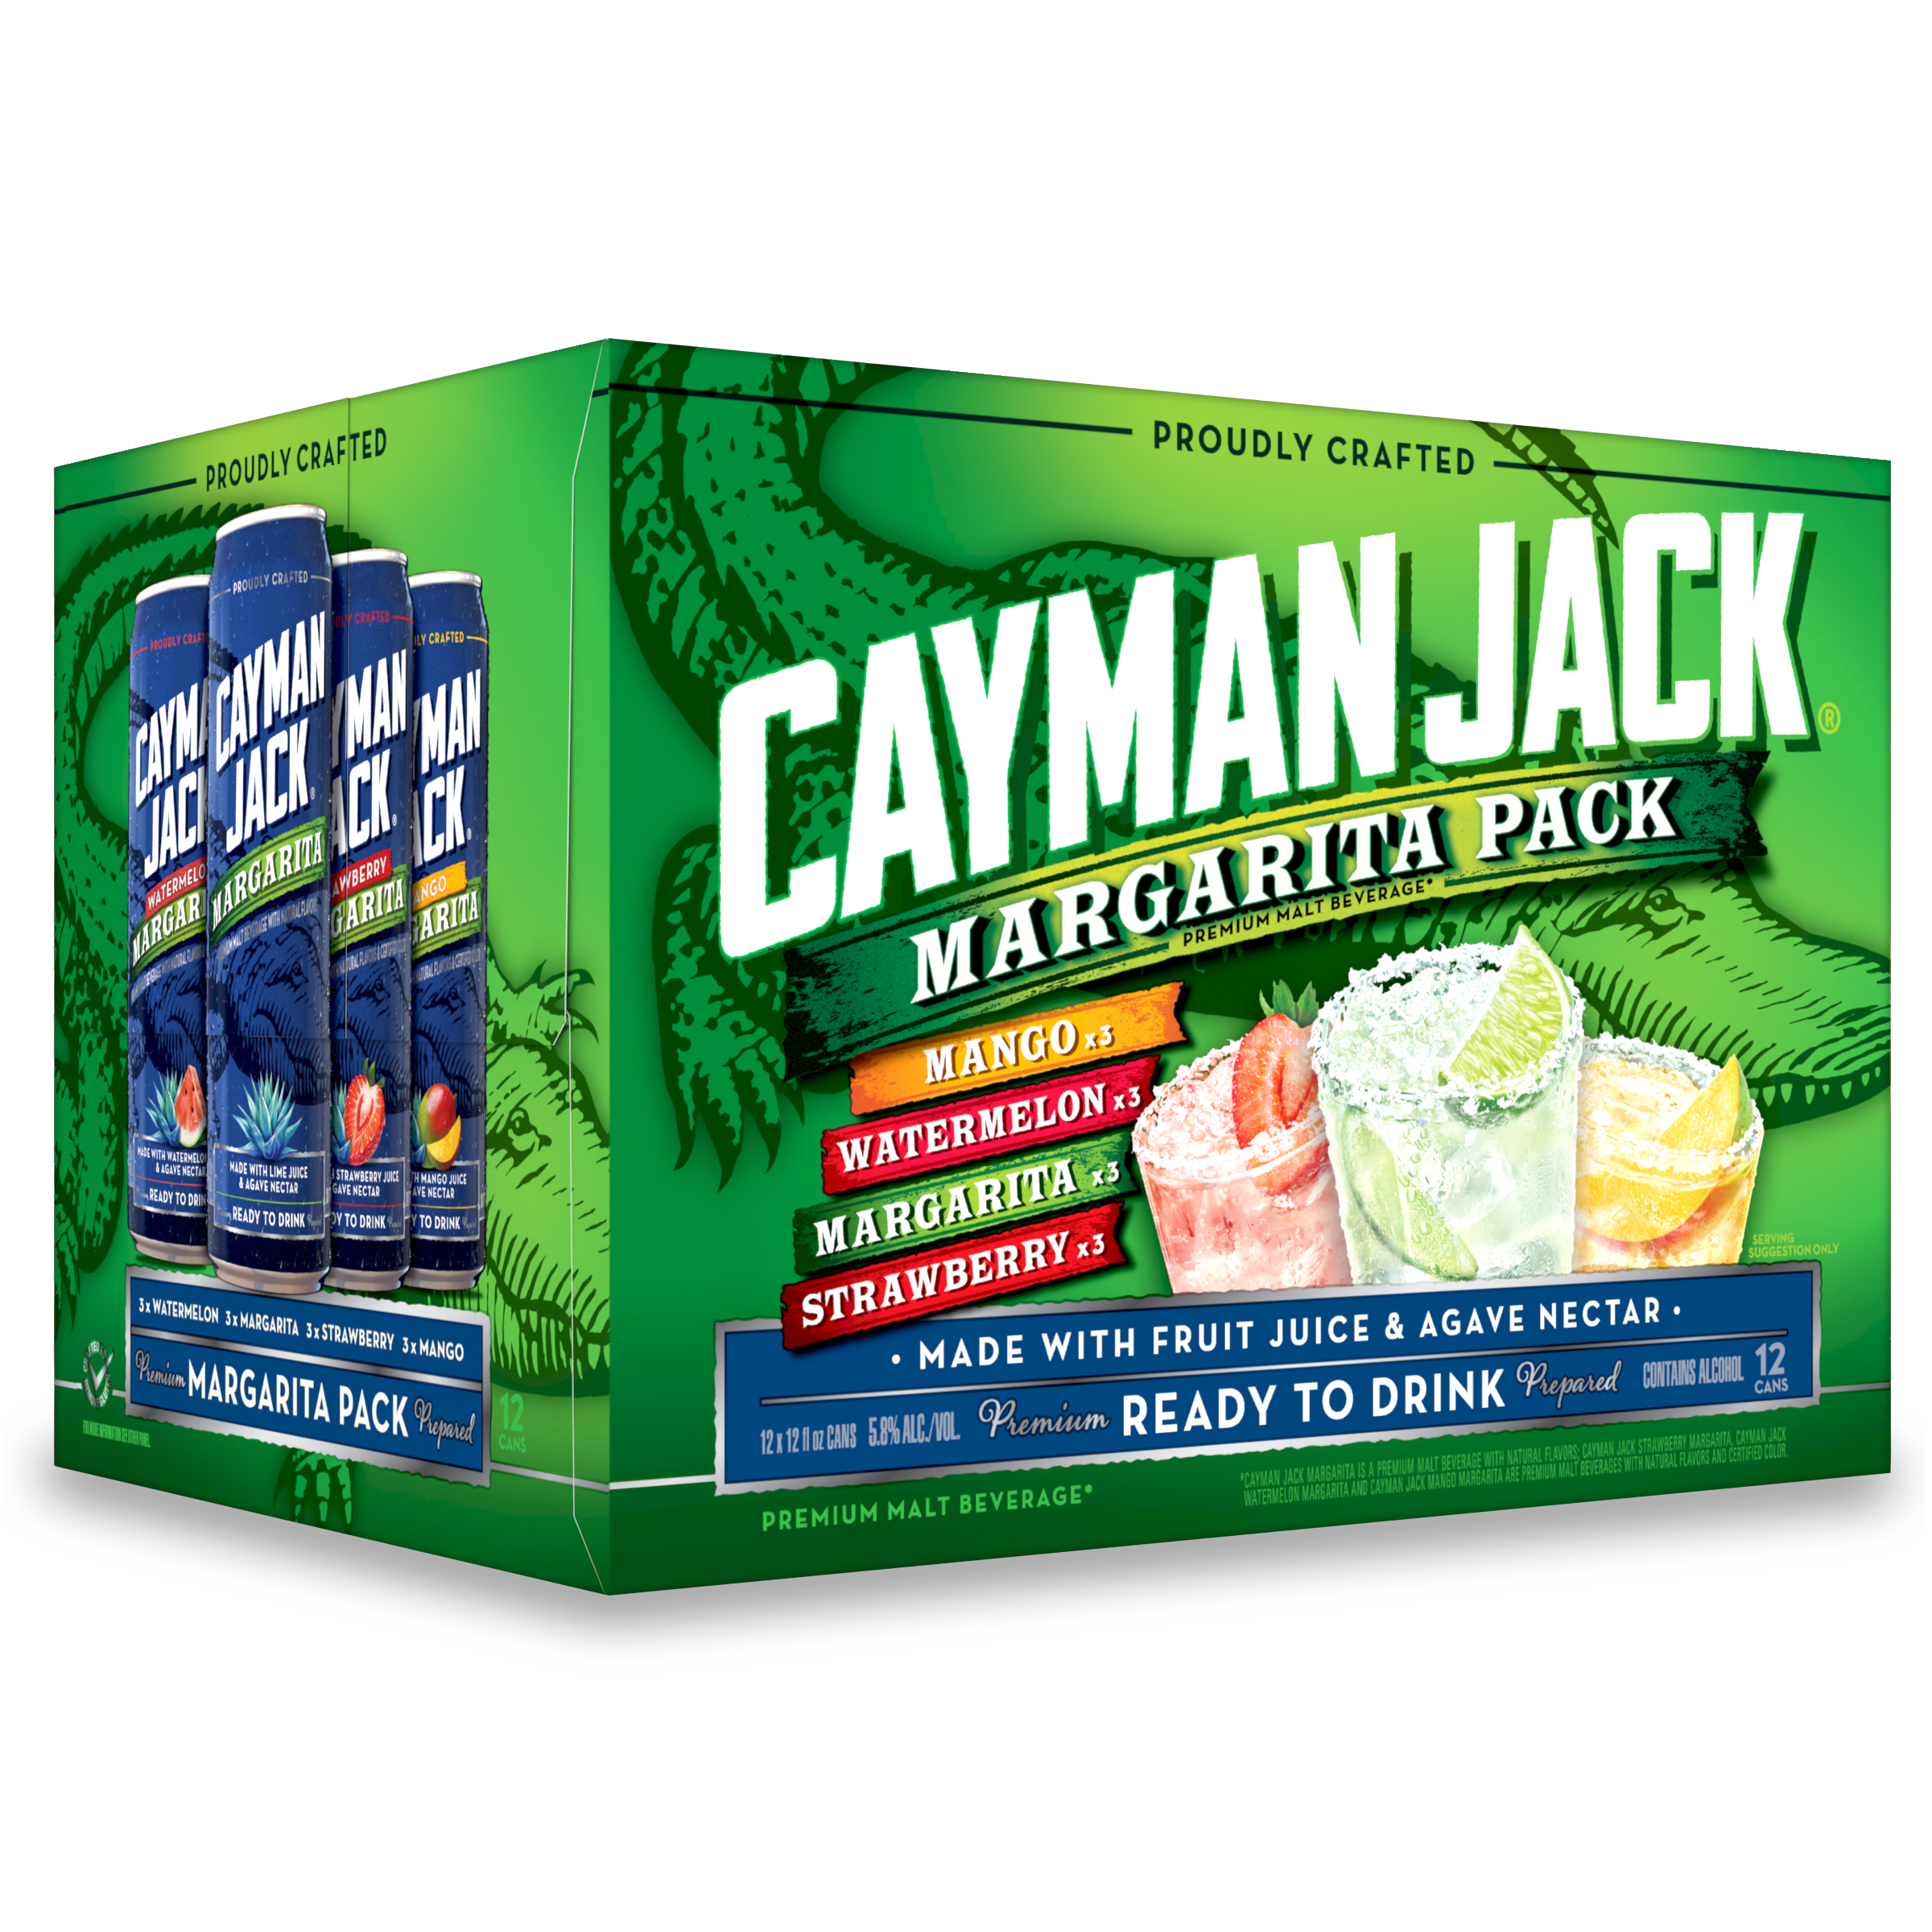 Cayman Jack, Cayman Jack Margarita Variety Pack 12pk